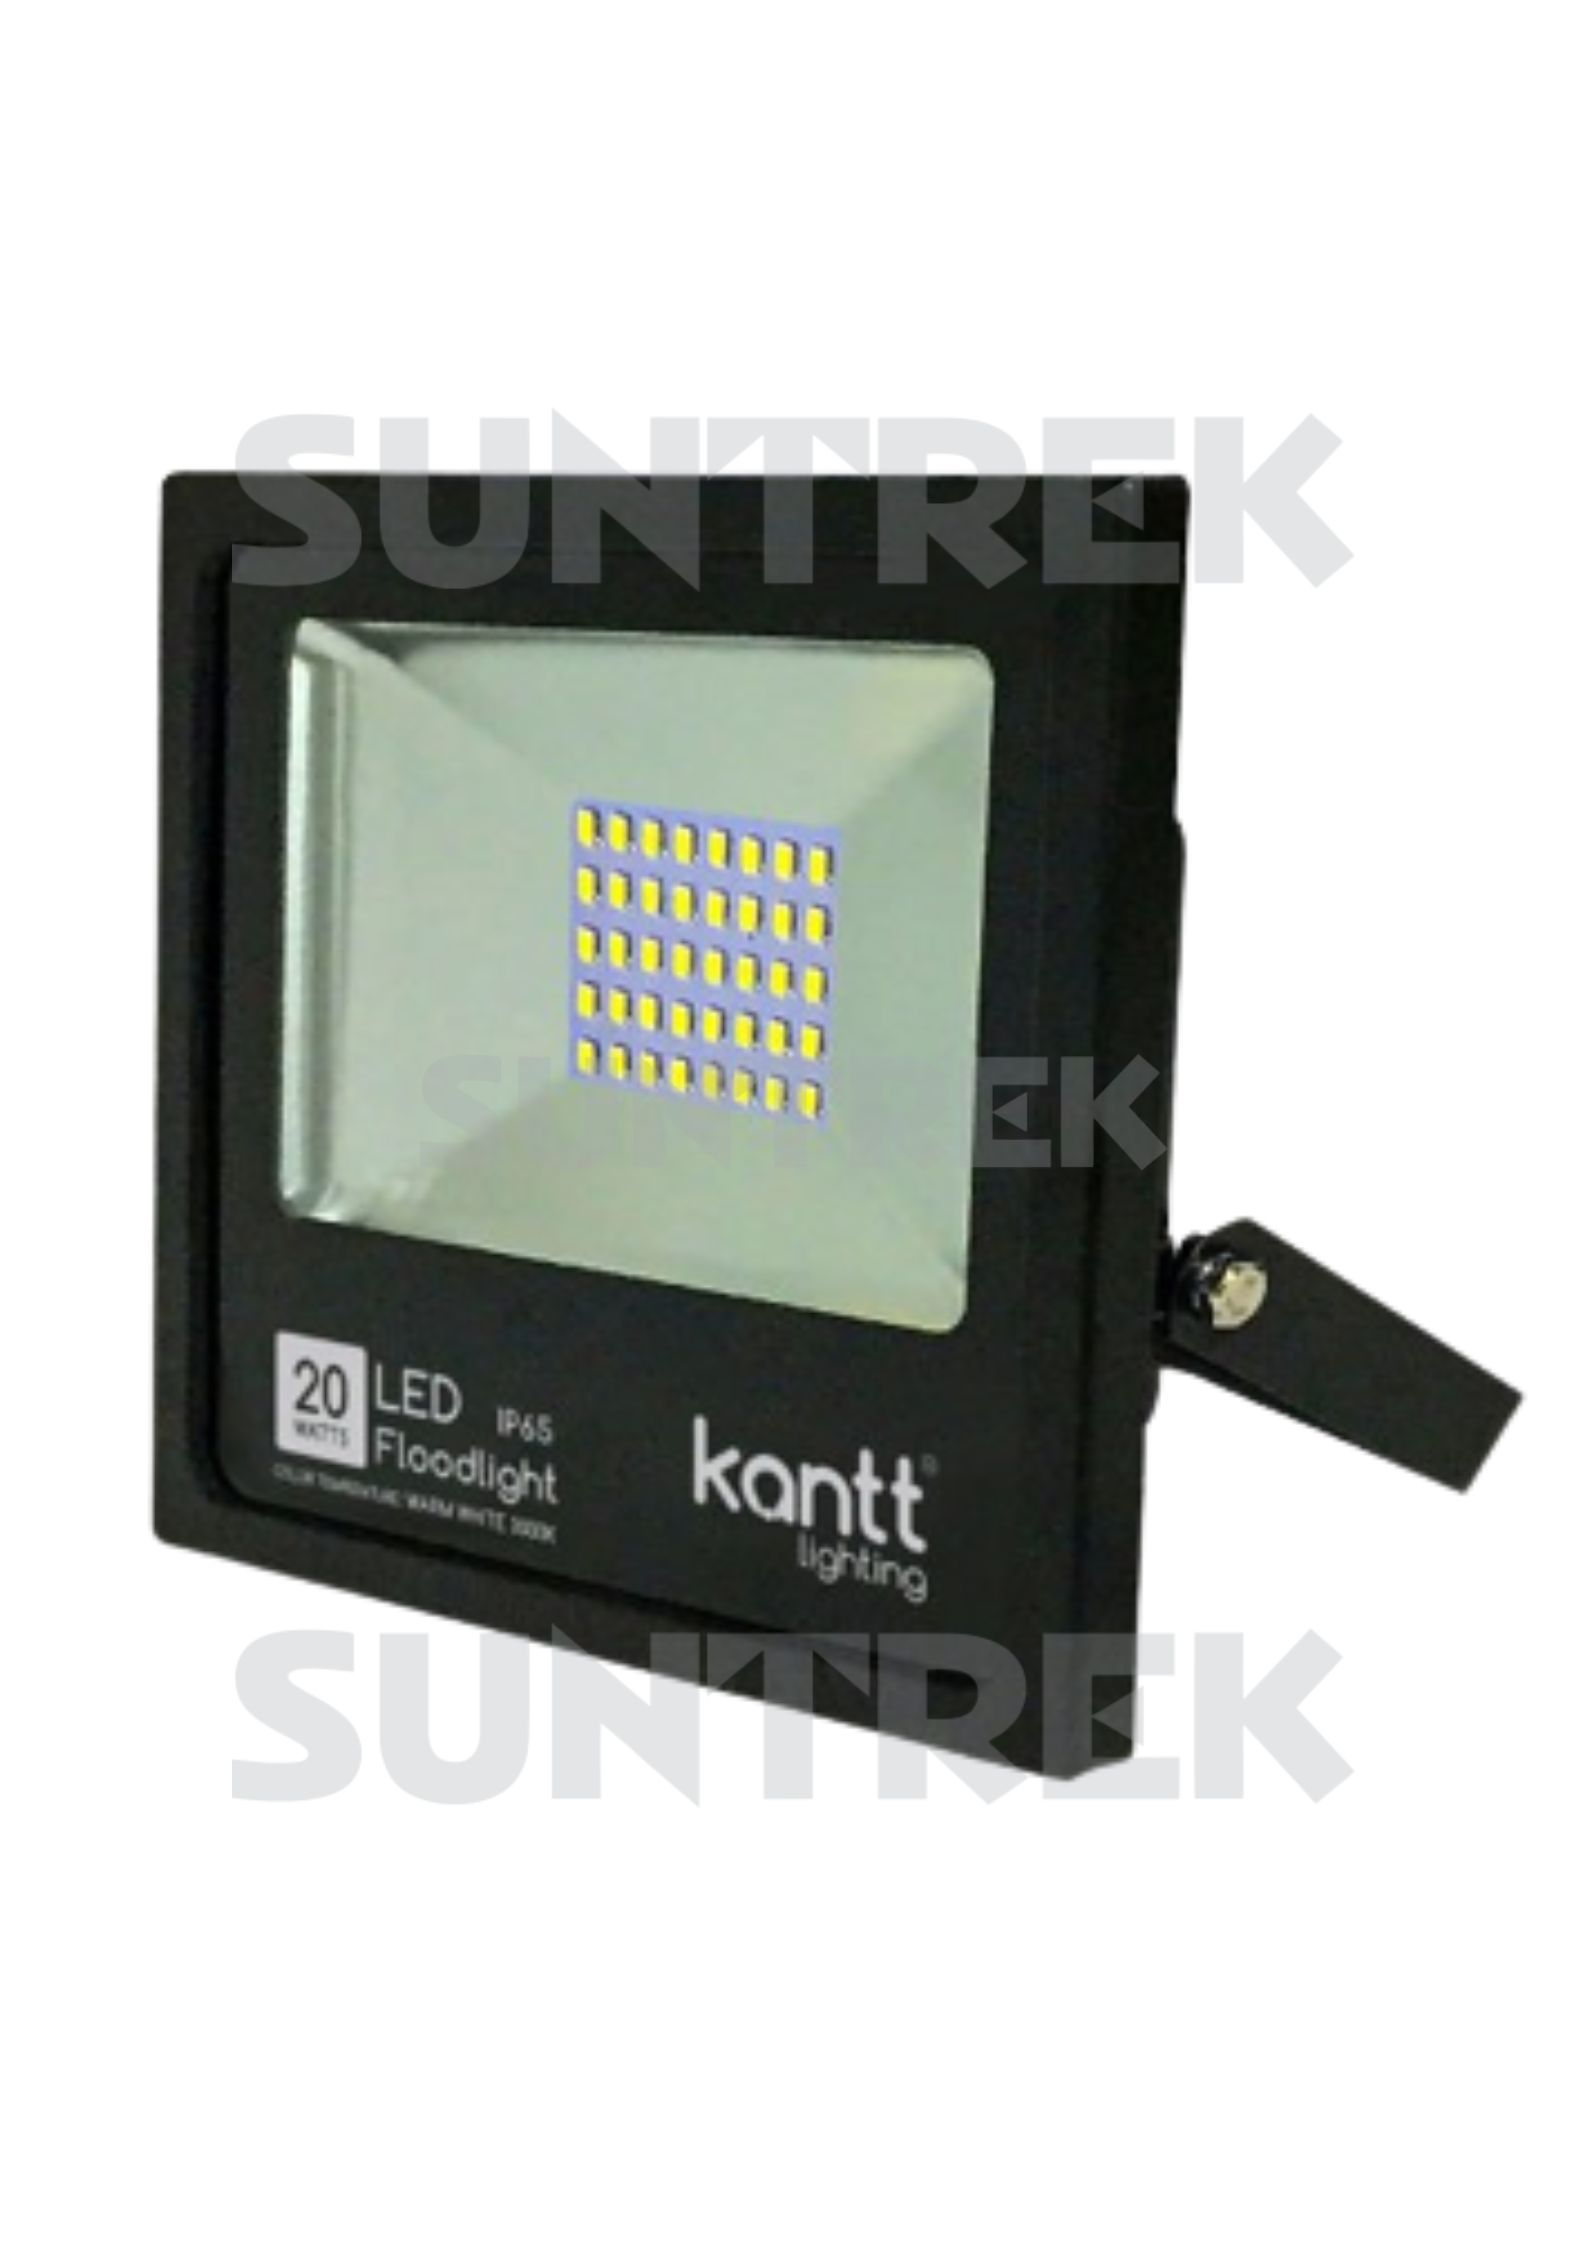 KANTT LED FLOOD LIGHT 20 WATTS (KA-FL20DL)